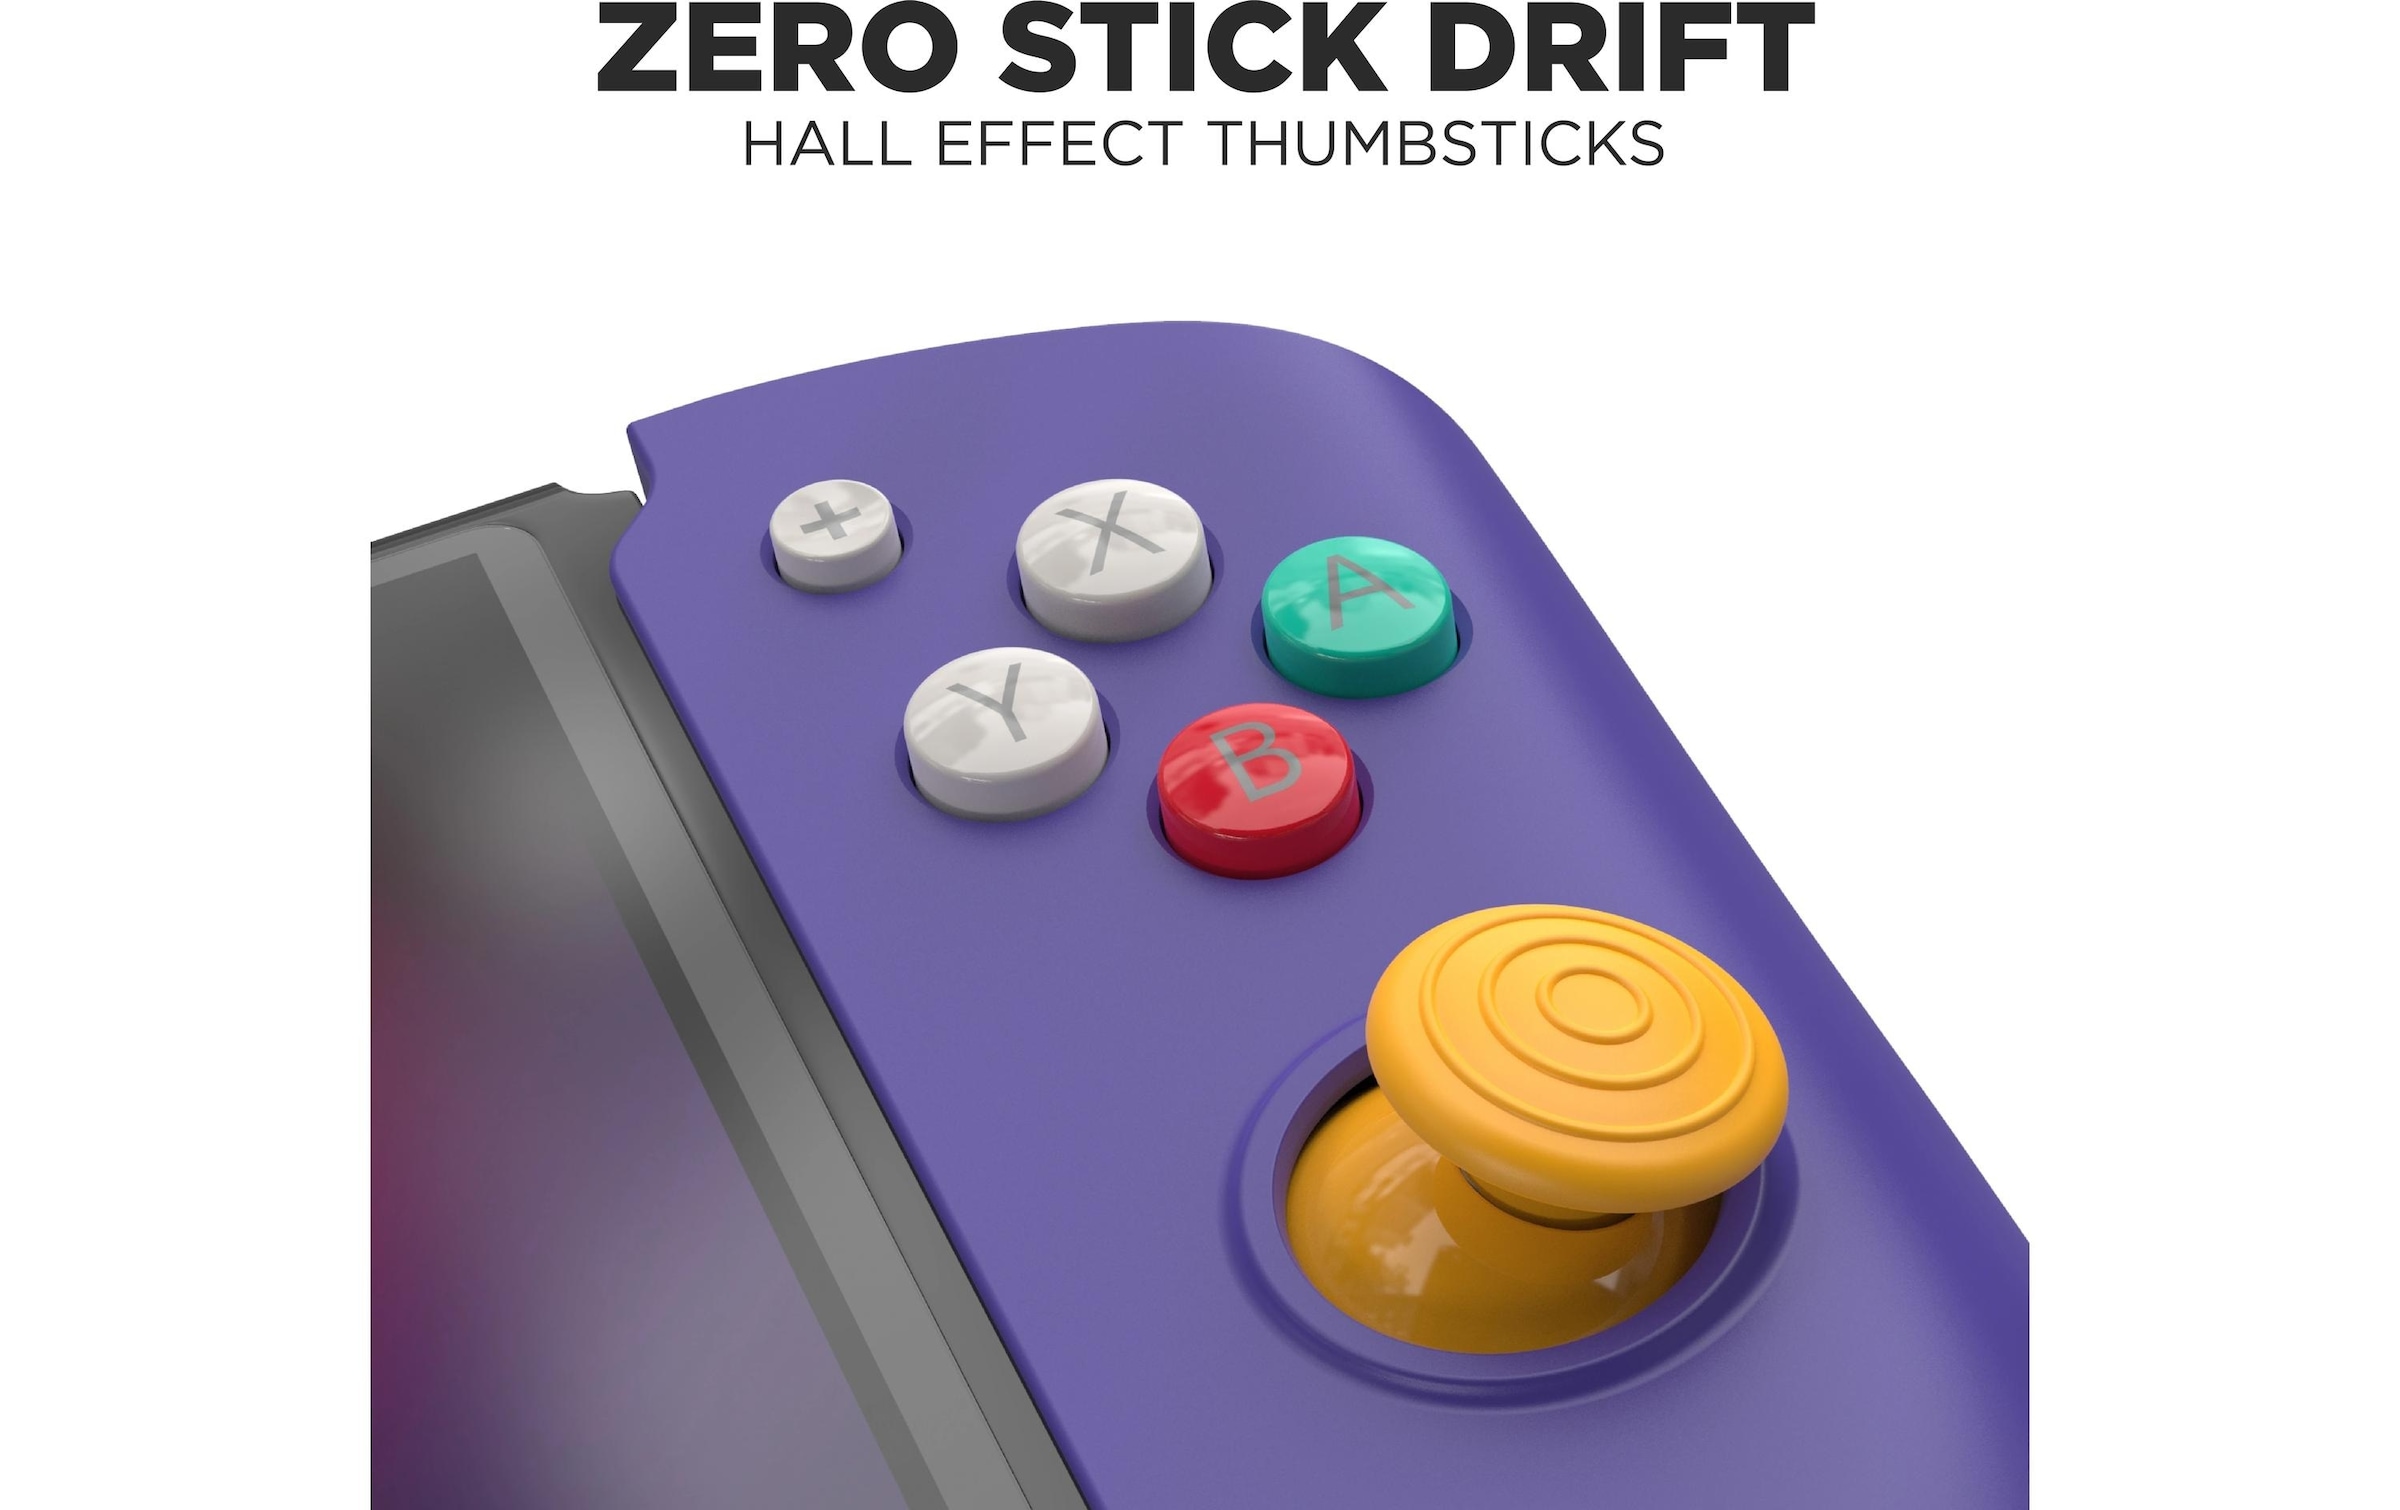 Nintendo-Schutzhülle »GAME Nitro Deck Retro for Switch & OLED Switch Violett«